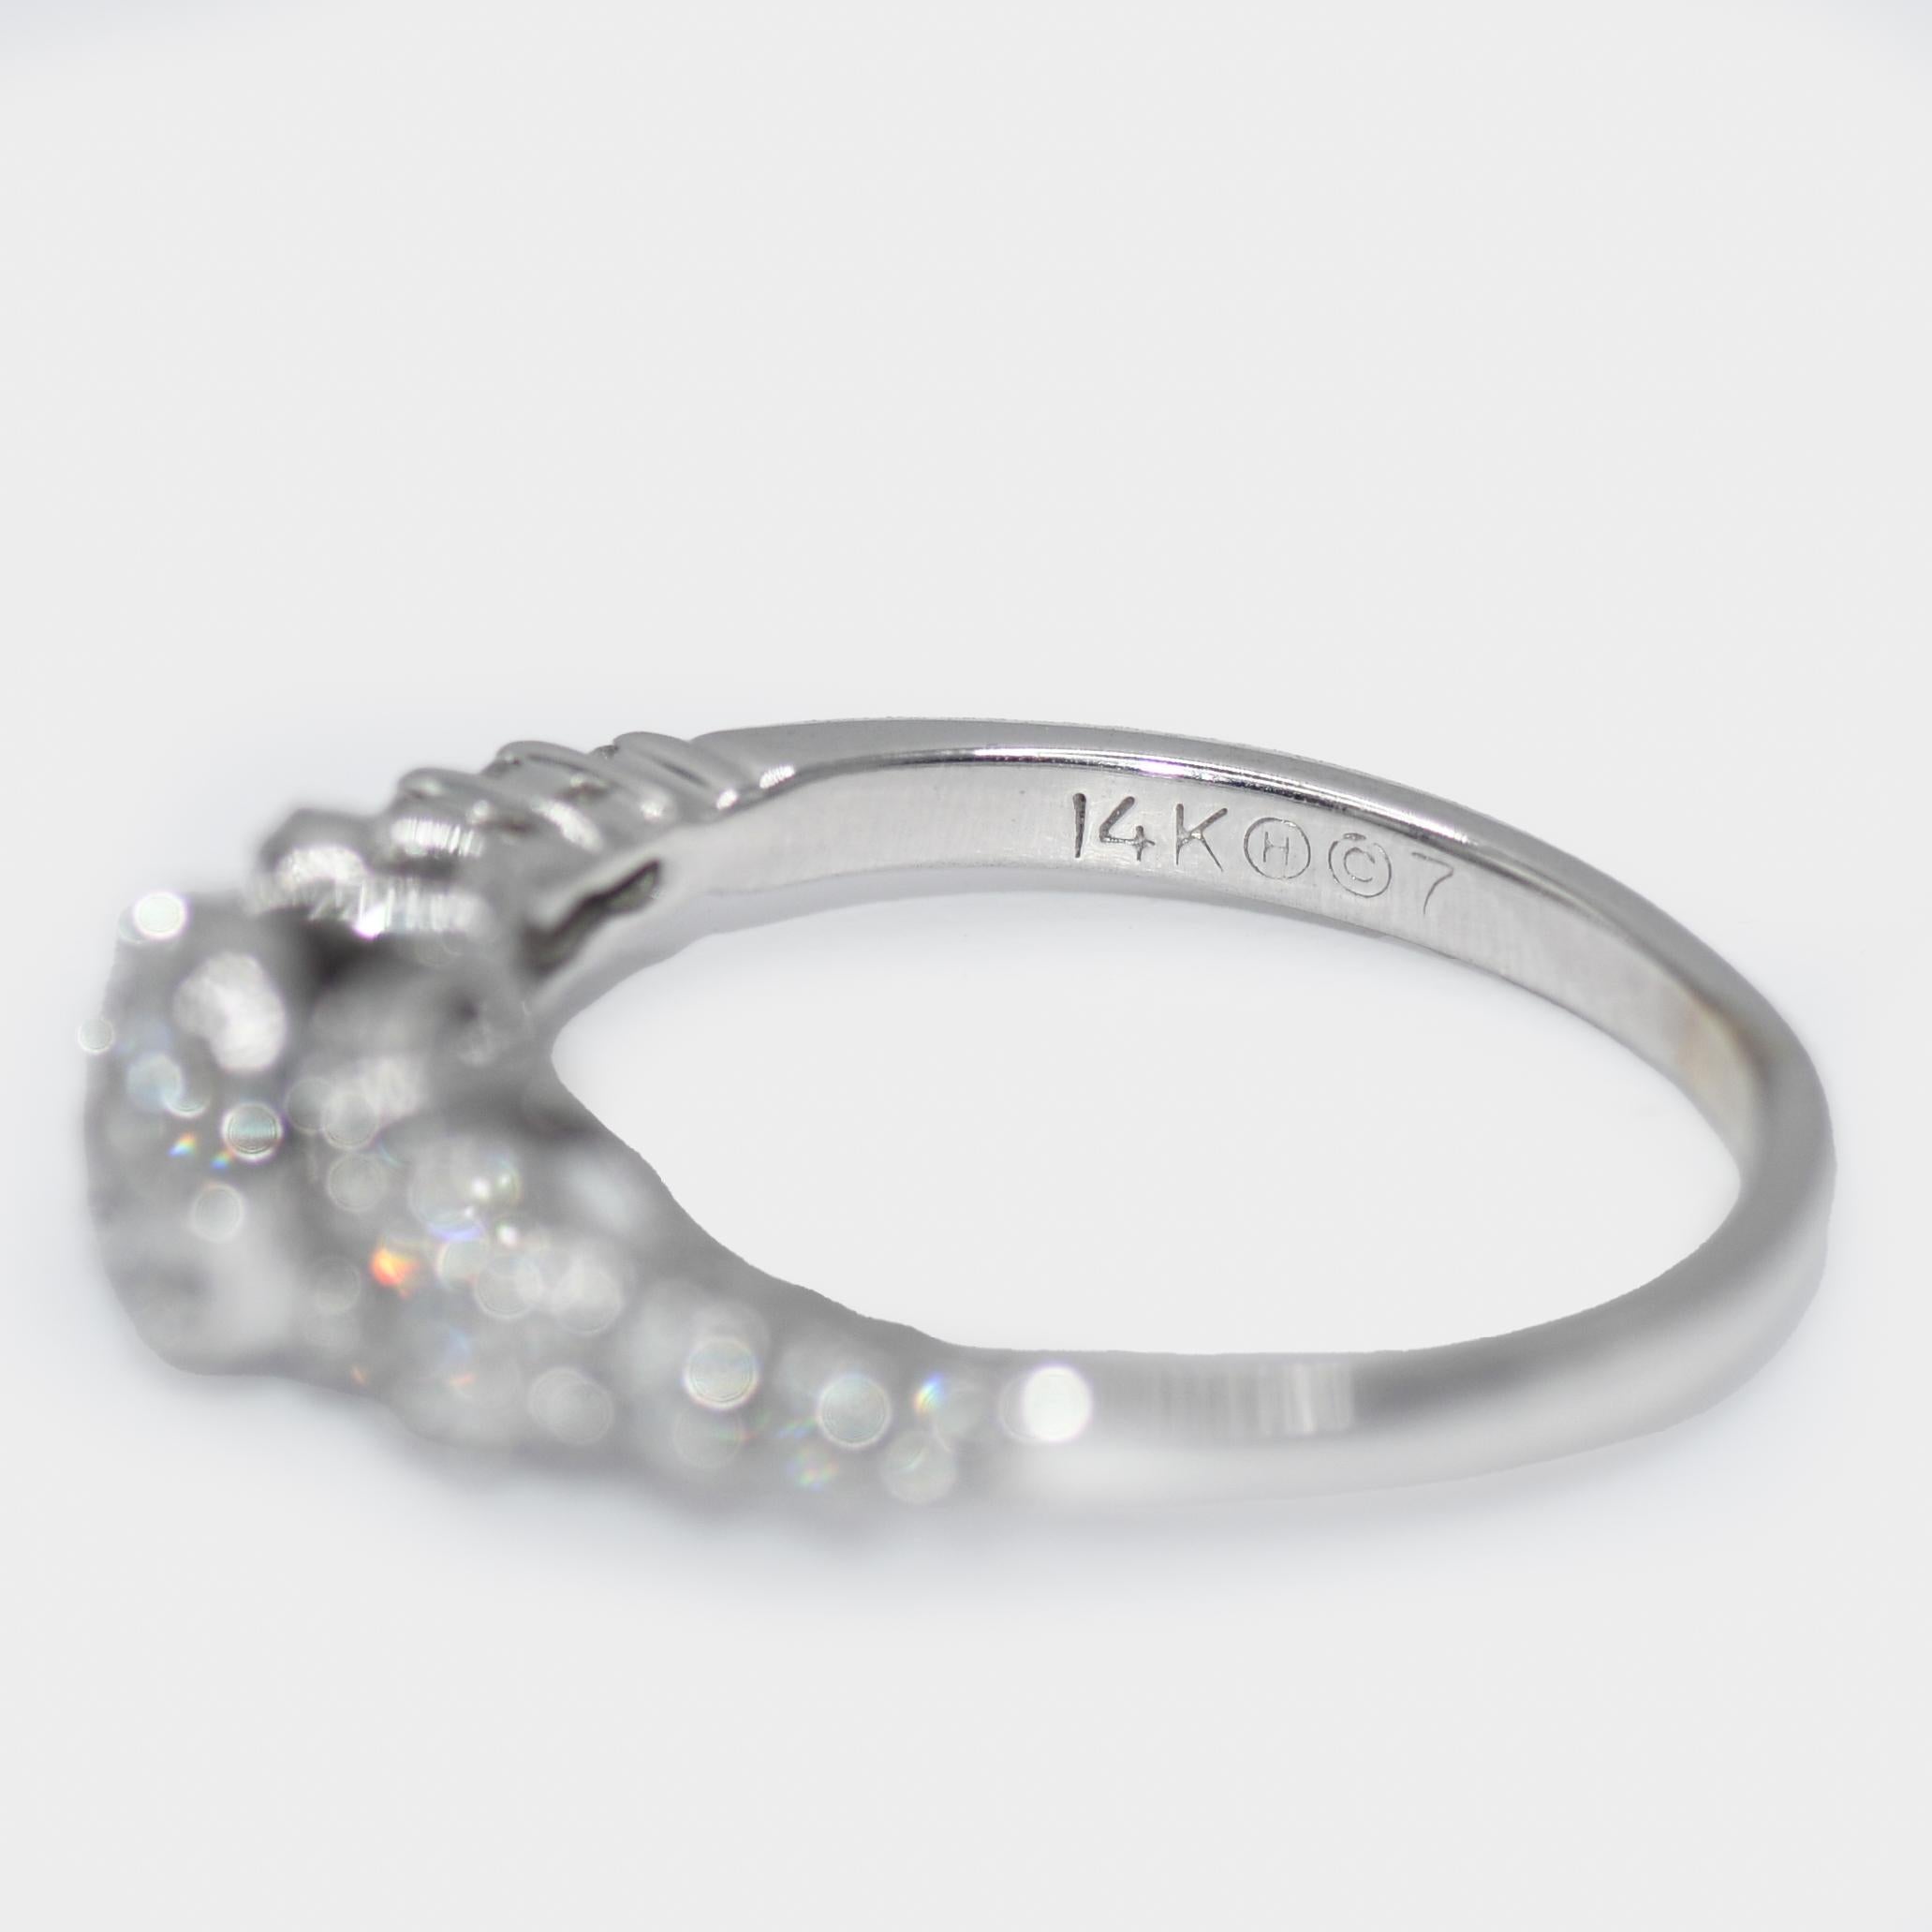 14K White Gold Ladies' Diamond Cluster Ring 0.40tdw, 2.6g For Sale 2